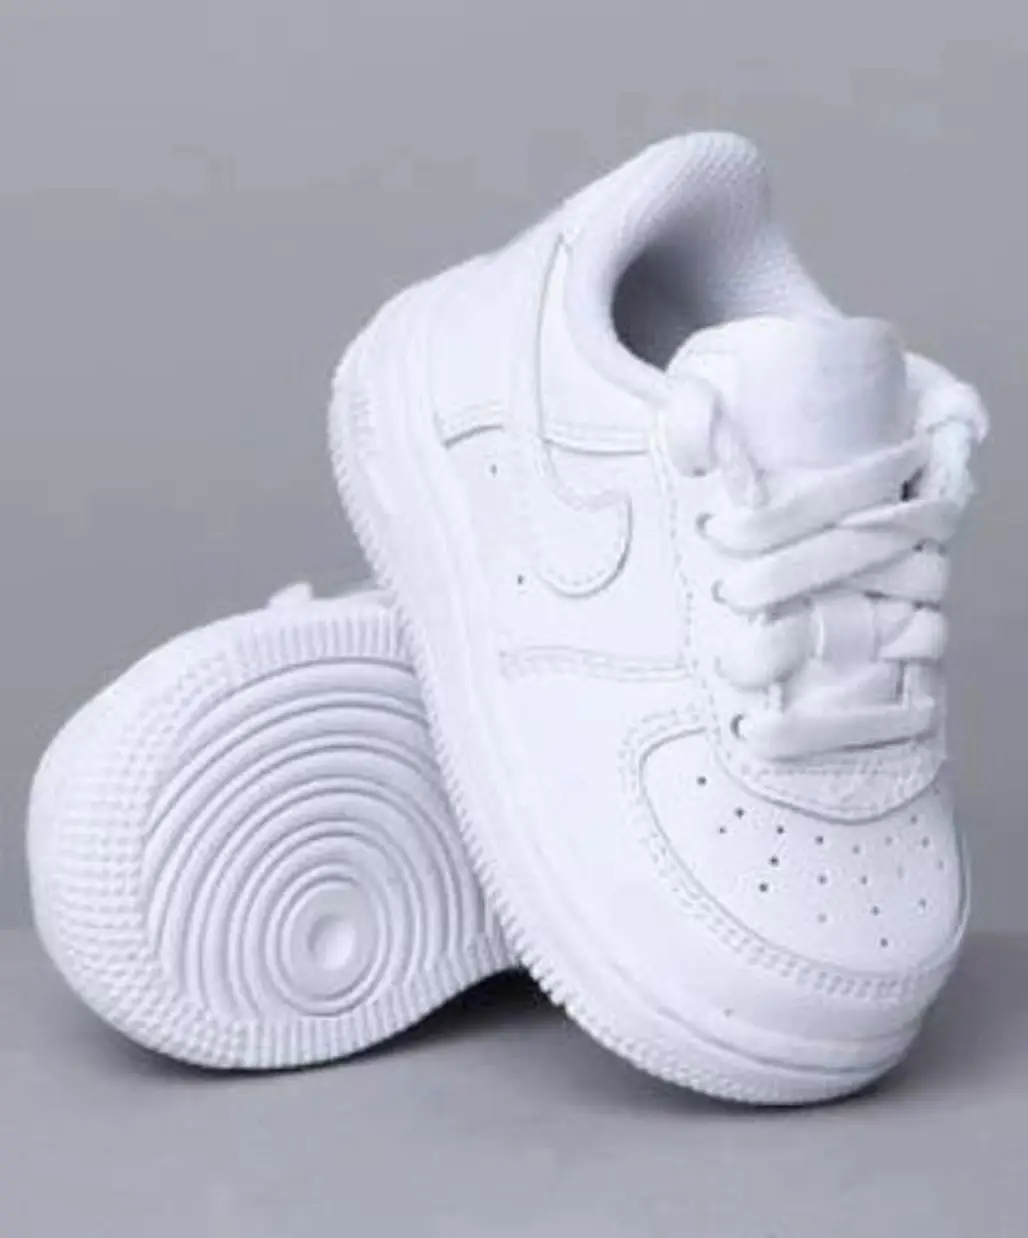 footwear,shoe,white,sneakers,product,